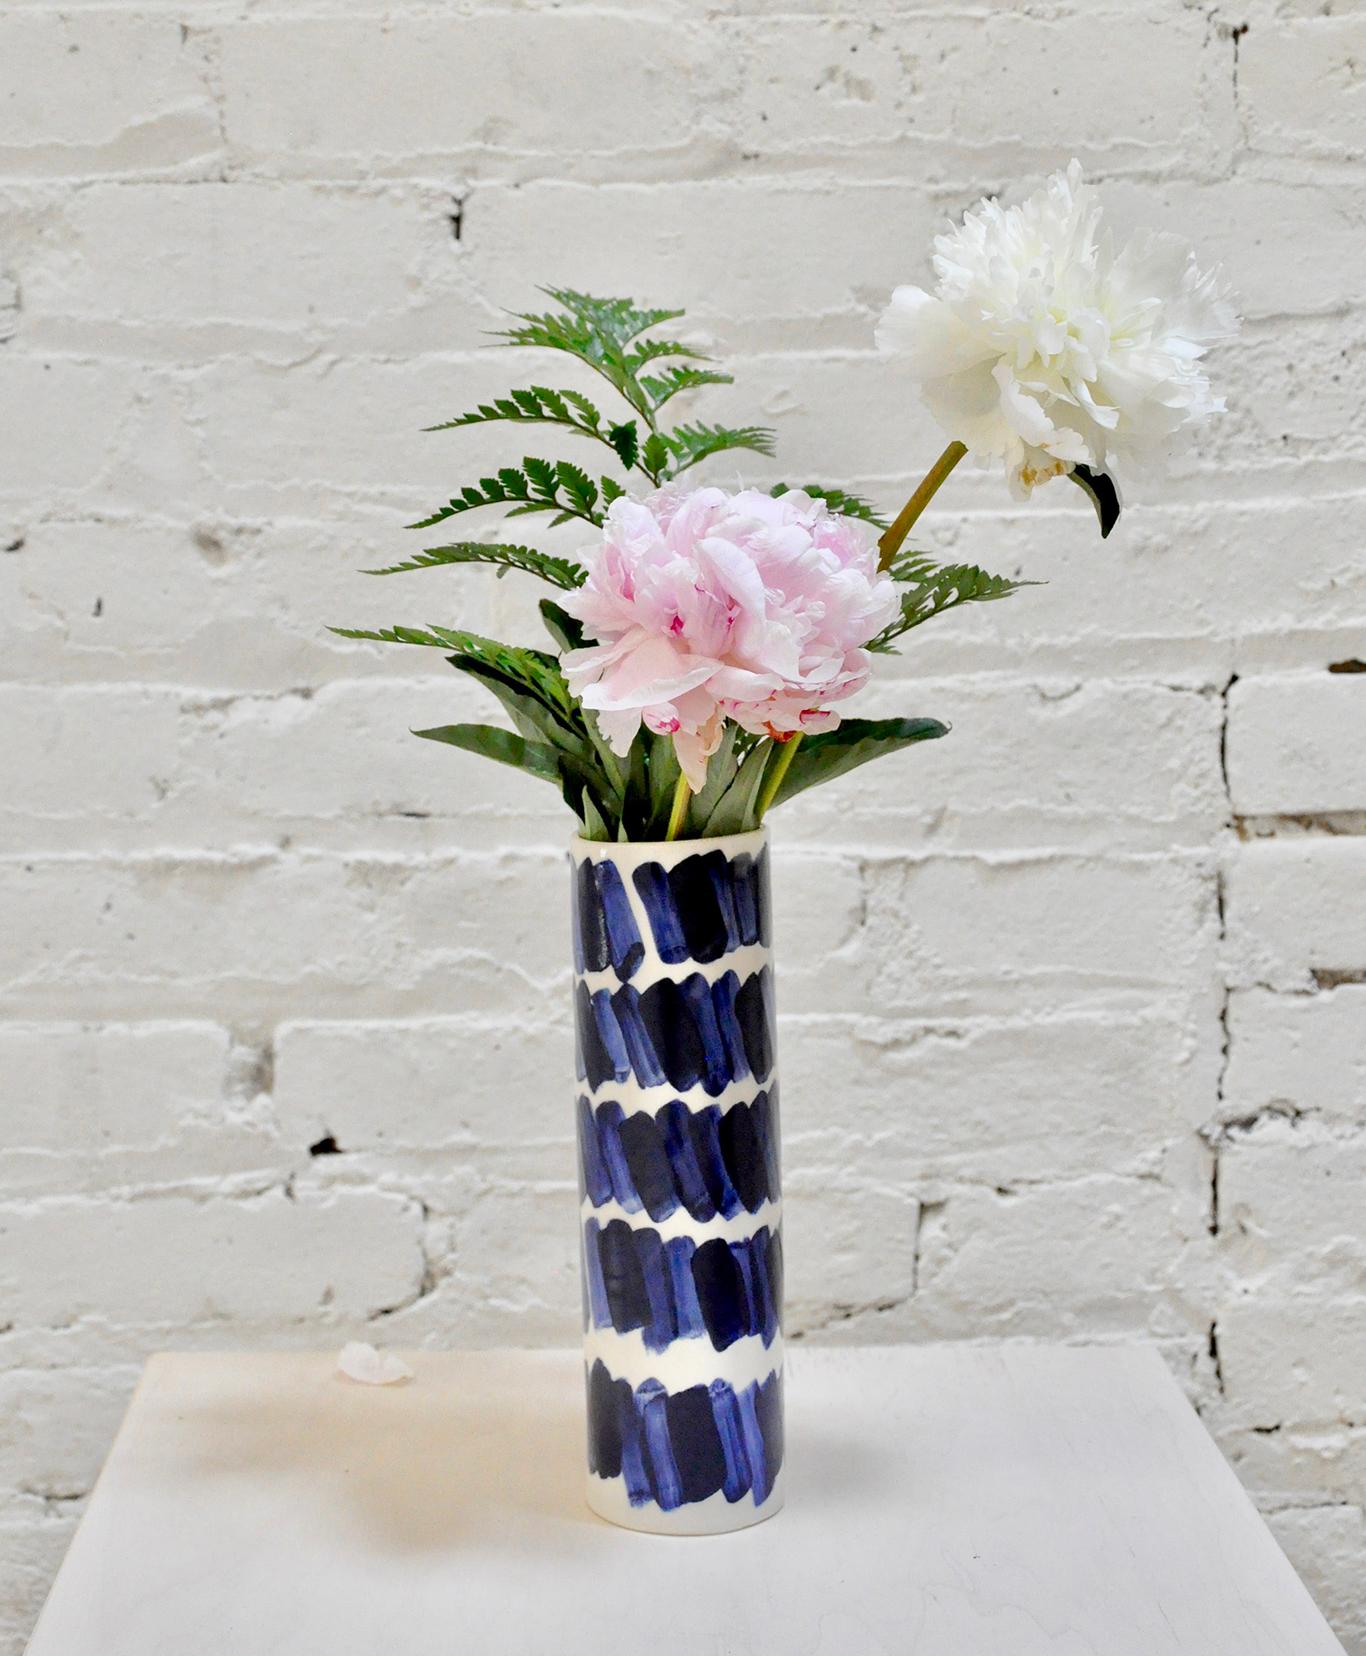 Pair of Rhythm Vases by Isabel Halley, in White Porcelain with Cobalt Glaze (Handgefertigt)